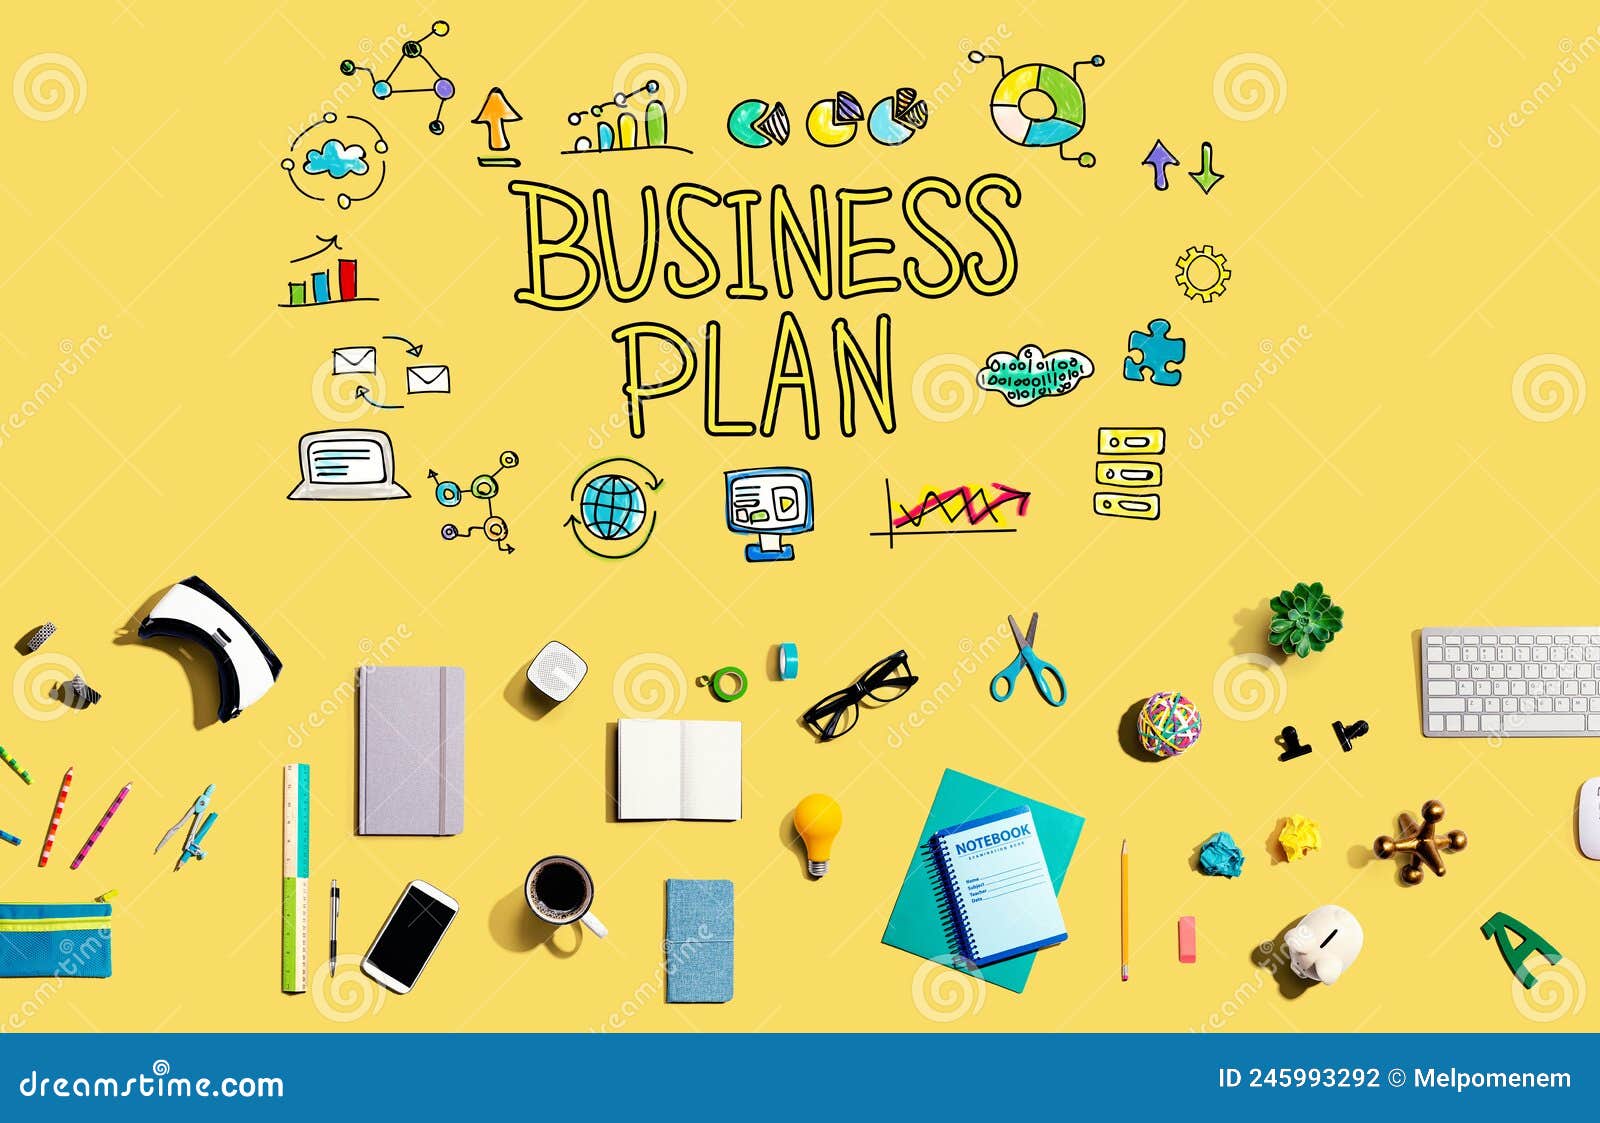 electronic gadgets business plan